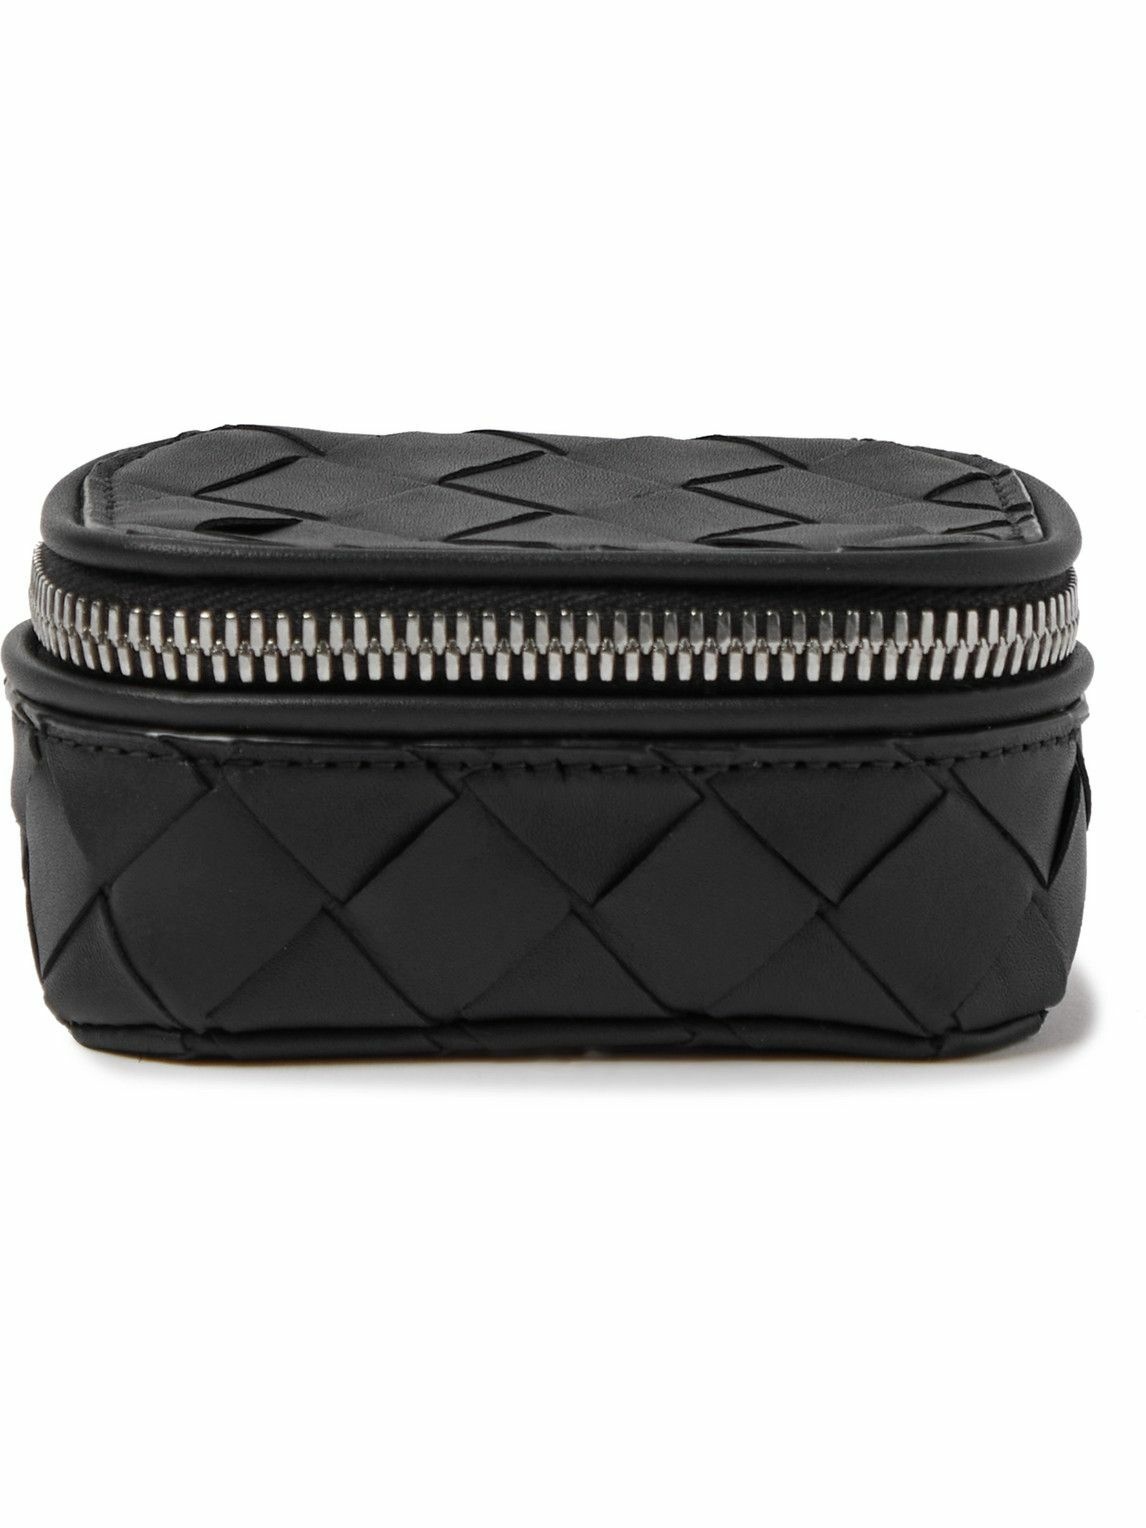 Photo: Bottega Veneta - Intrecciato Leather Cufflinks Holder